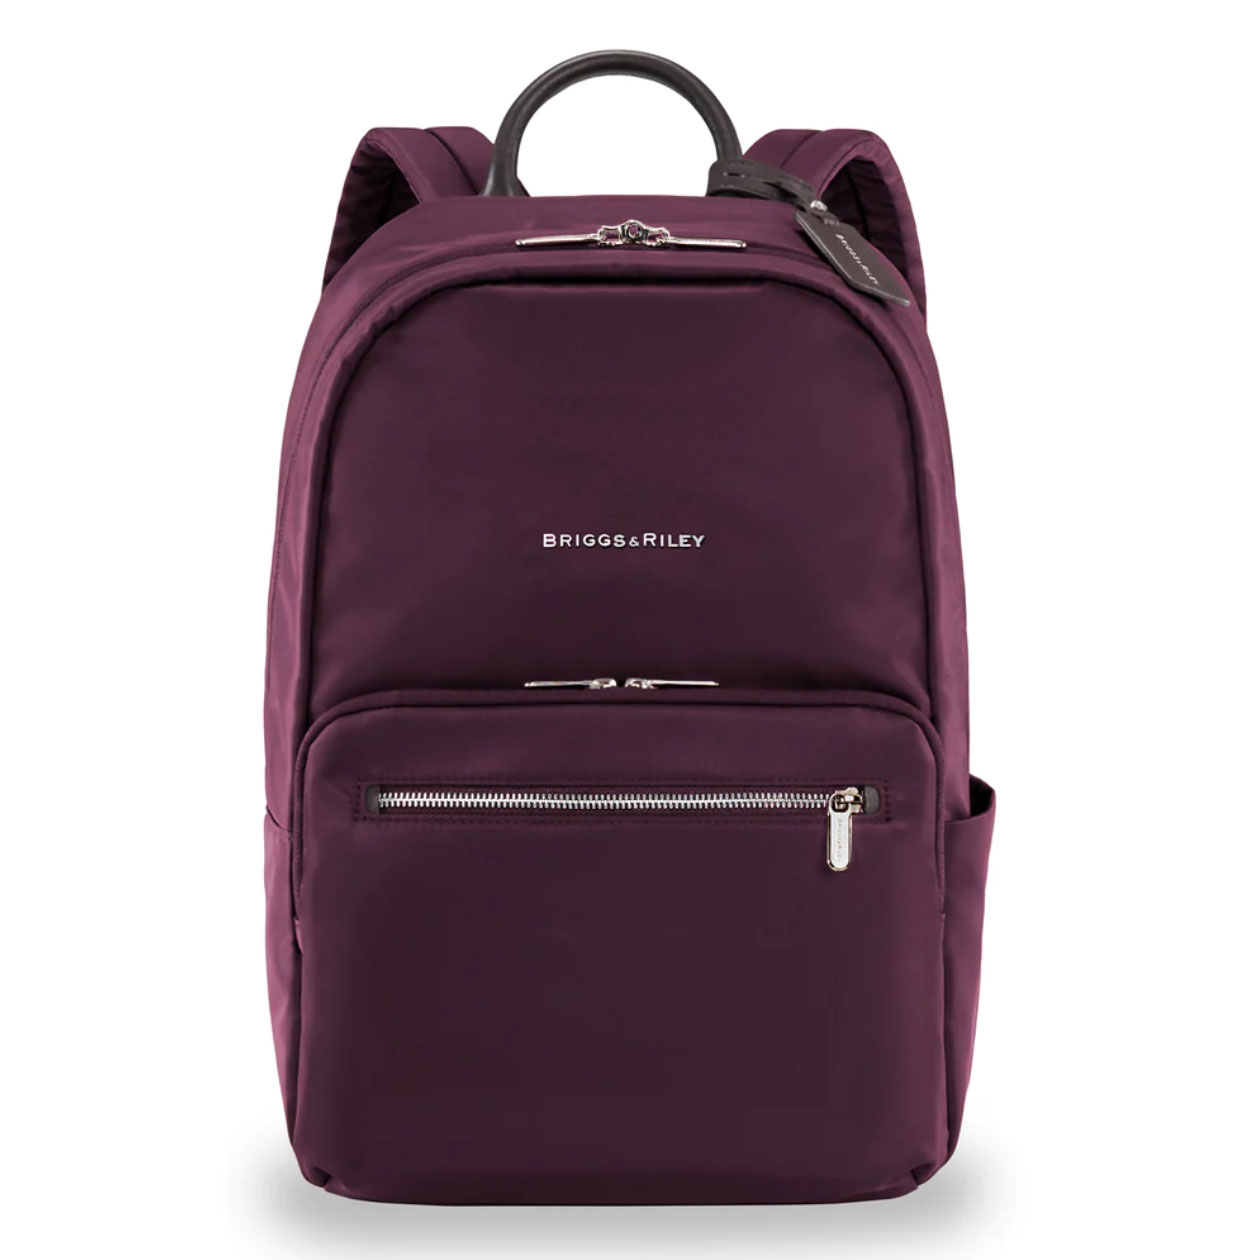 Maroon backpack